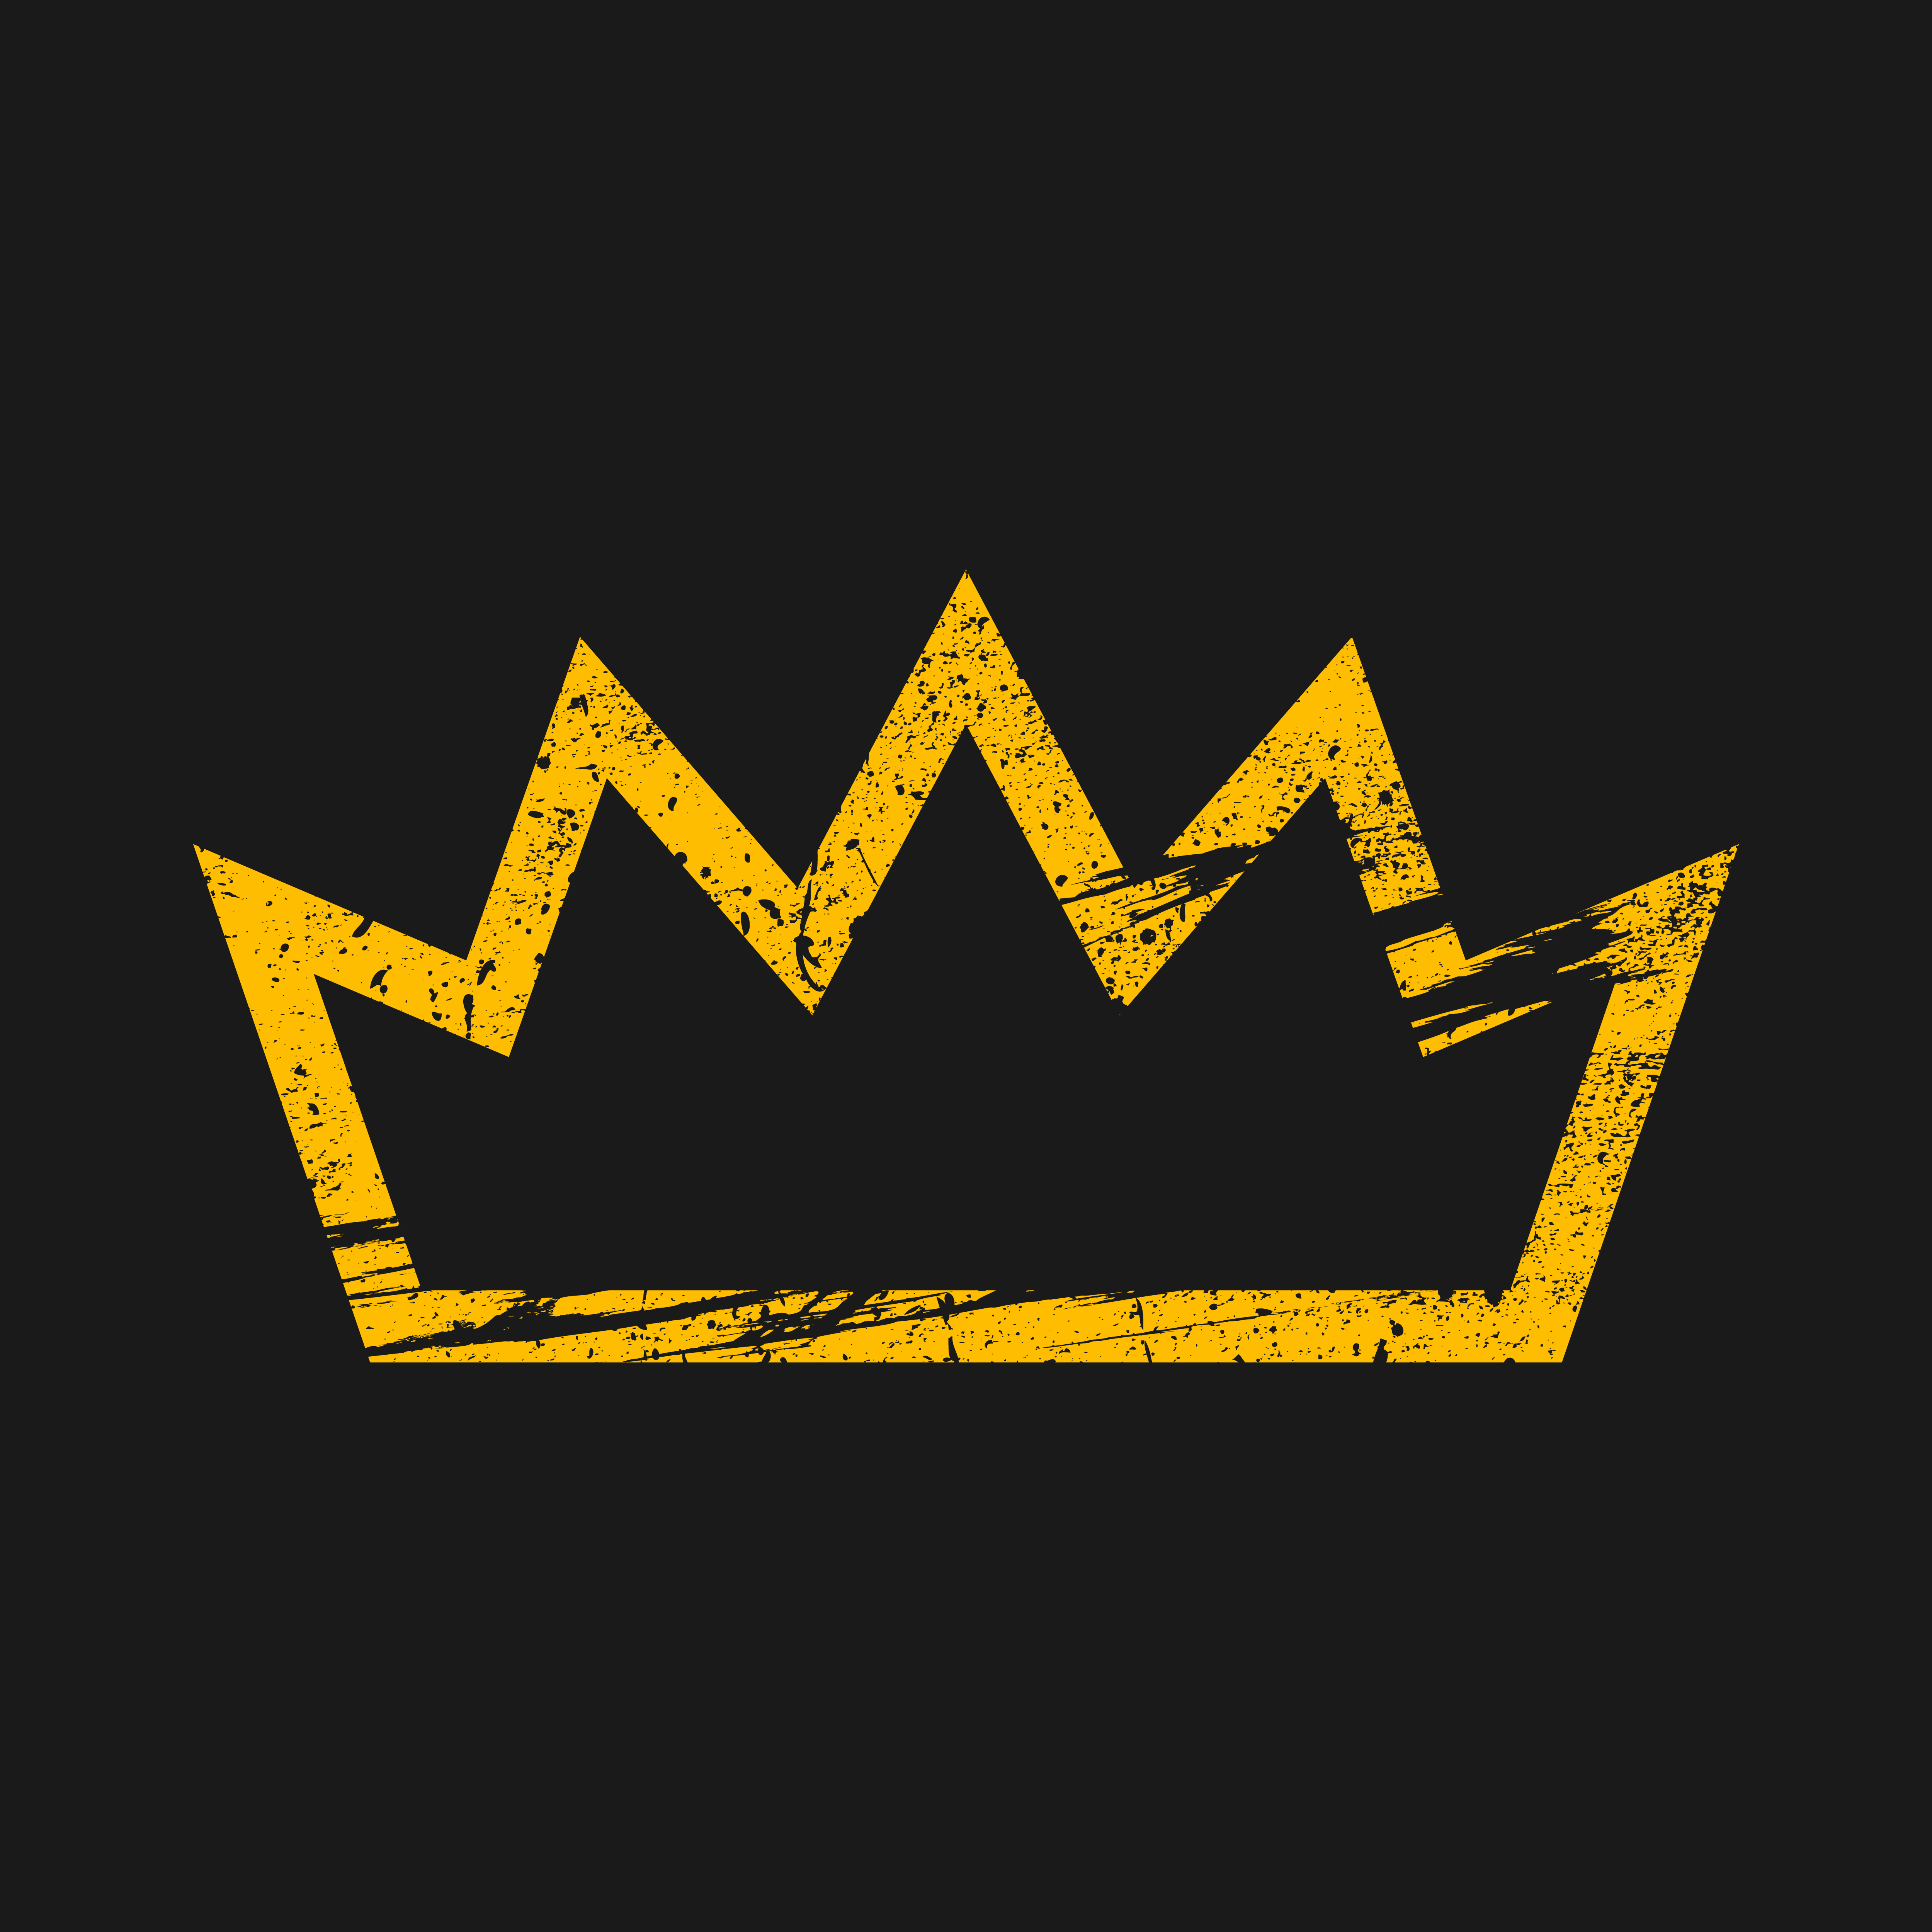 Download Royal crown vector icon - Download Free Vectors, Clipart ...